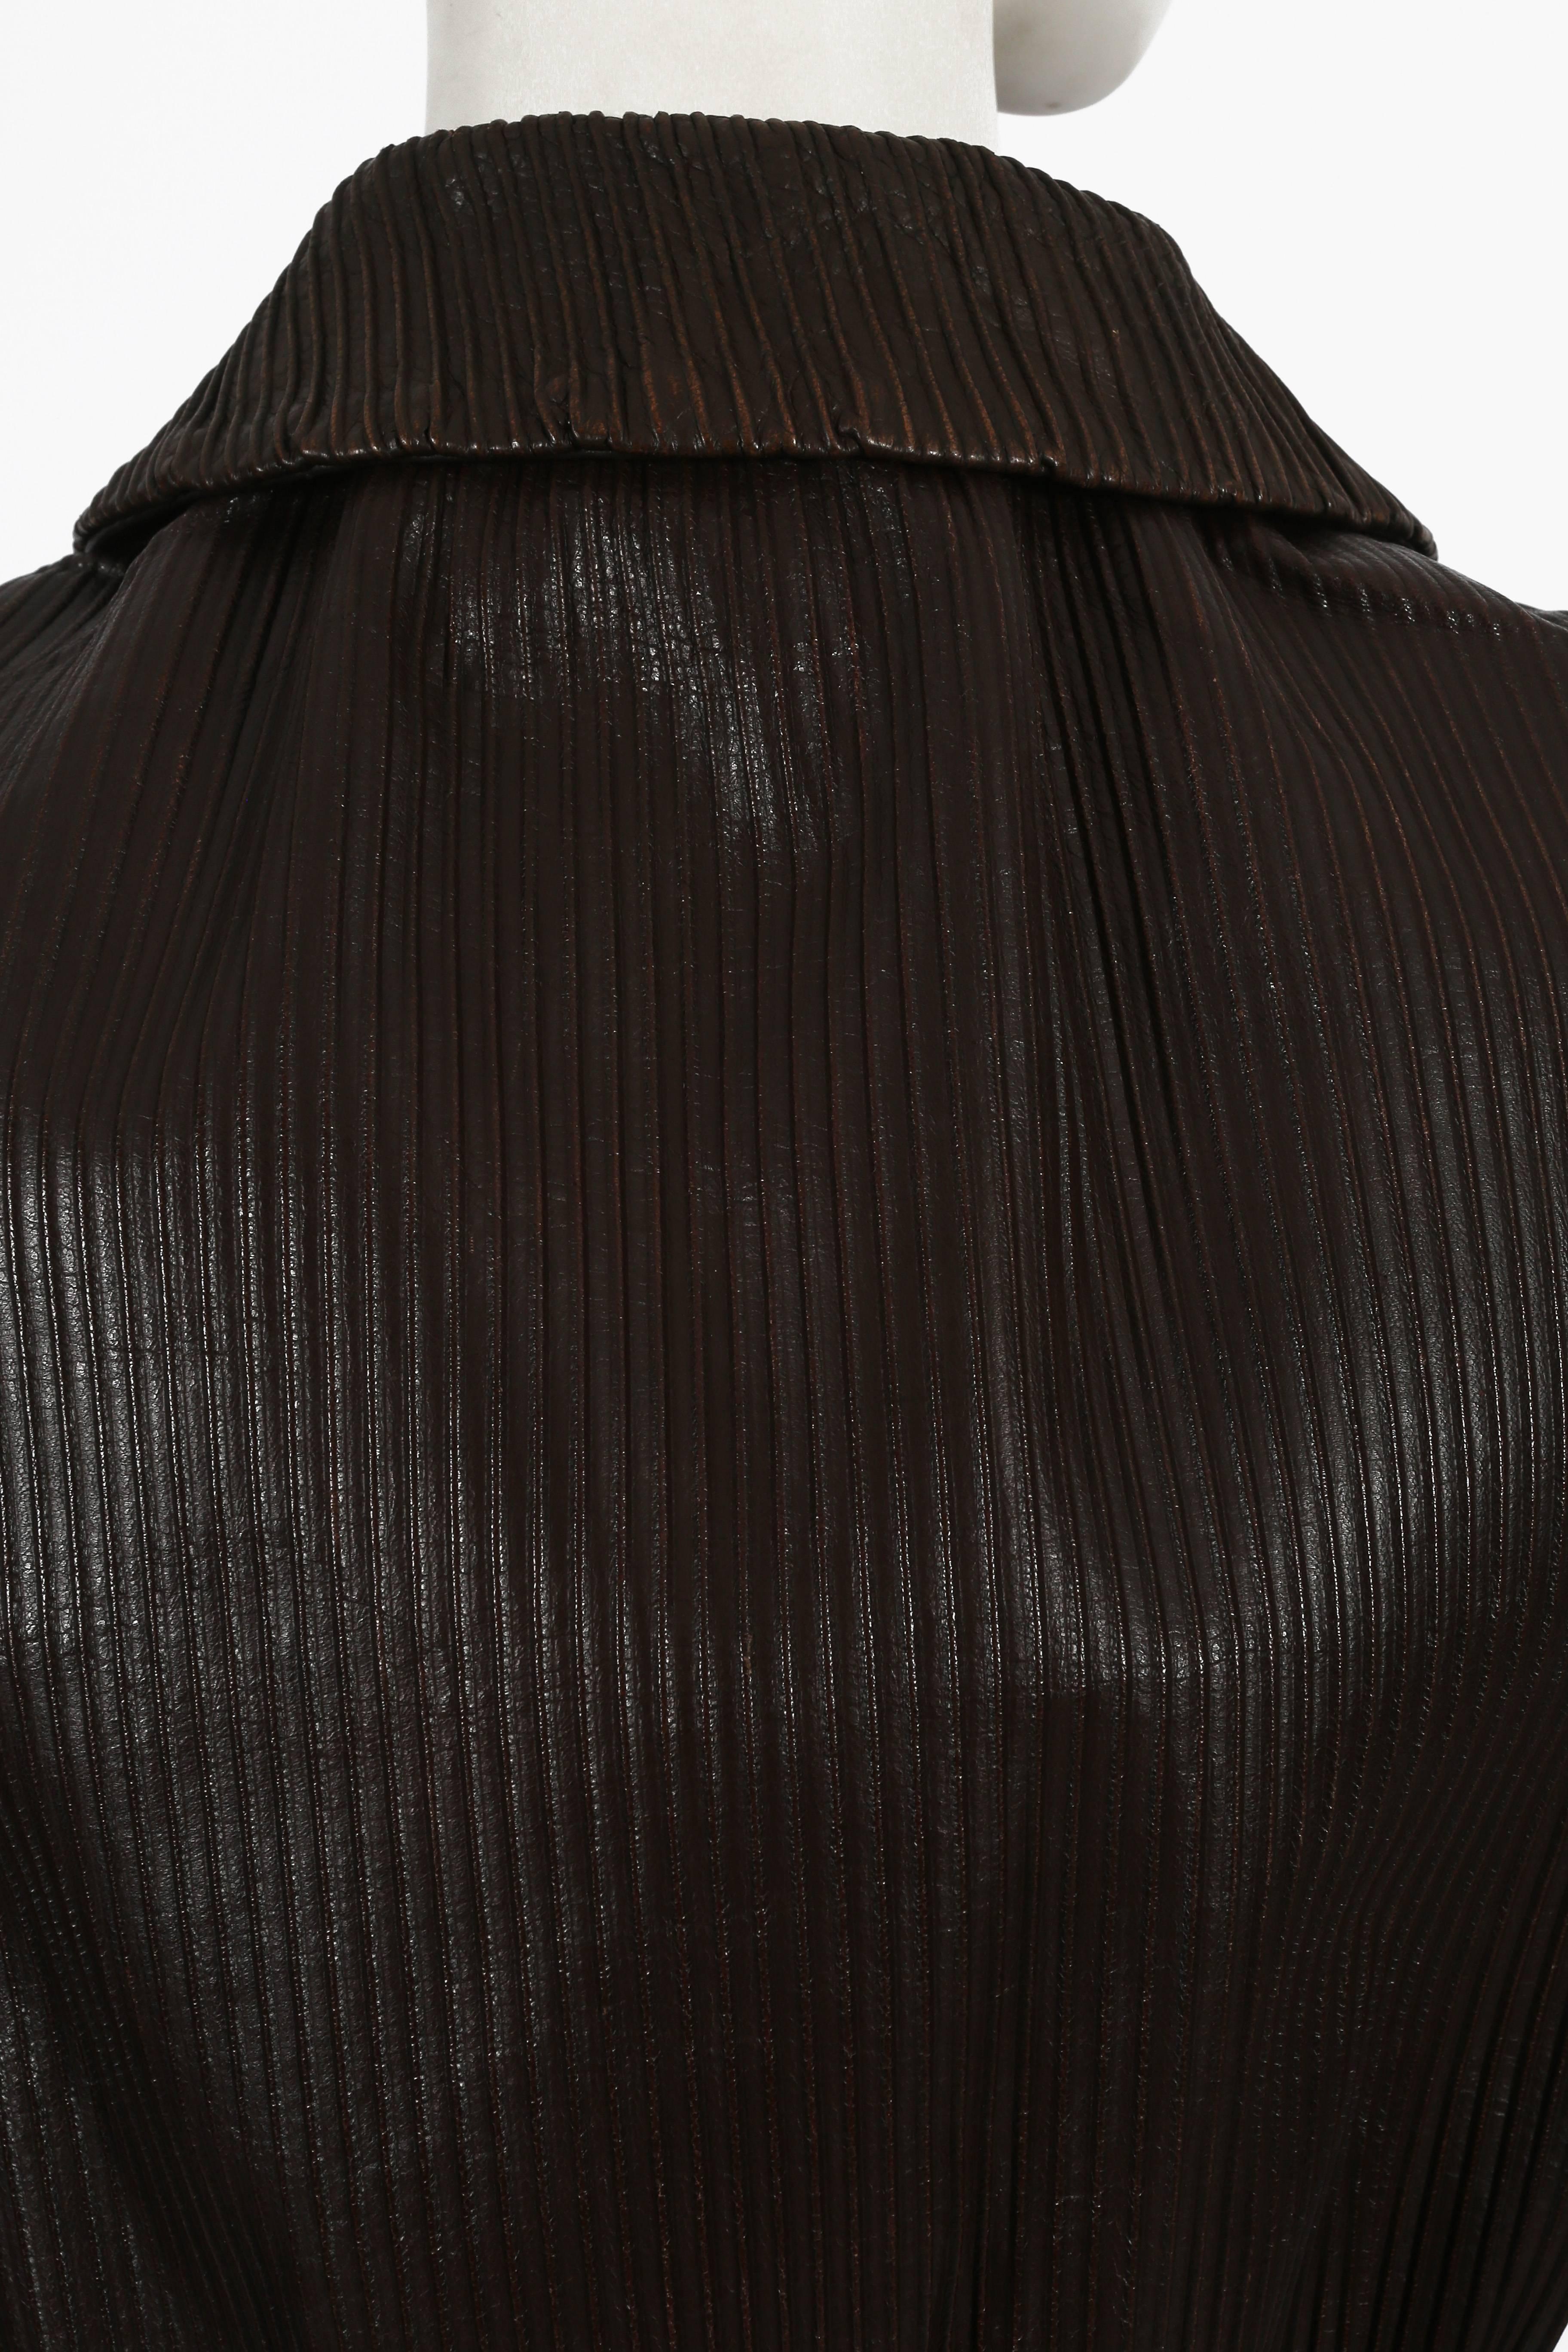 Black Ossie Clark brown leather 'Rocker' jacket, c. 1966